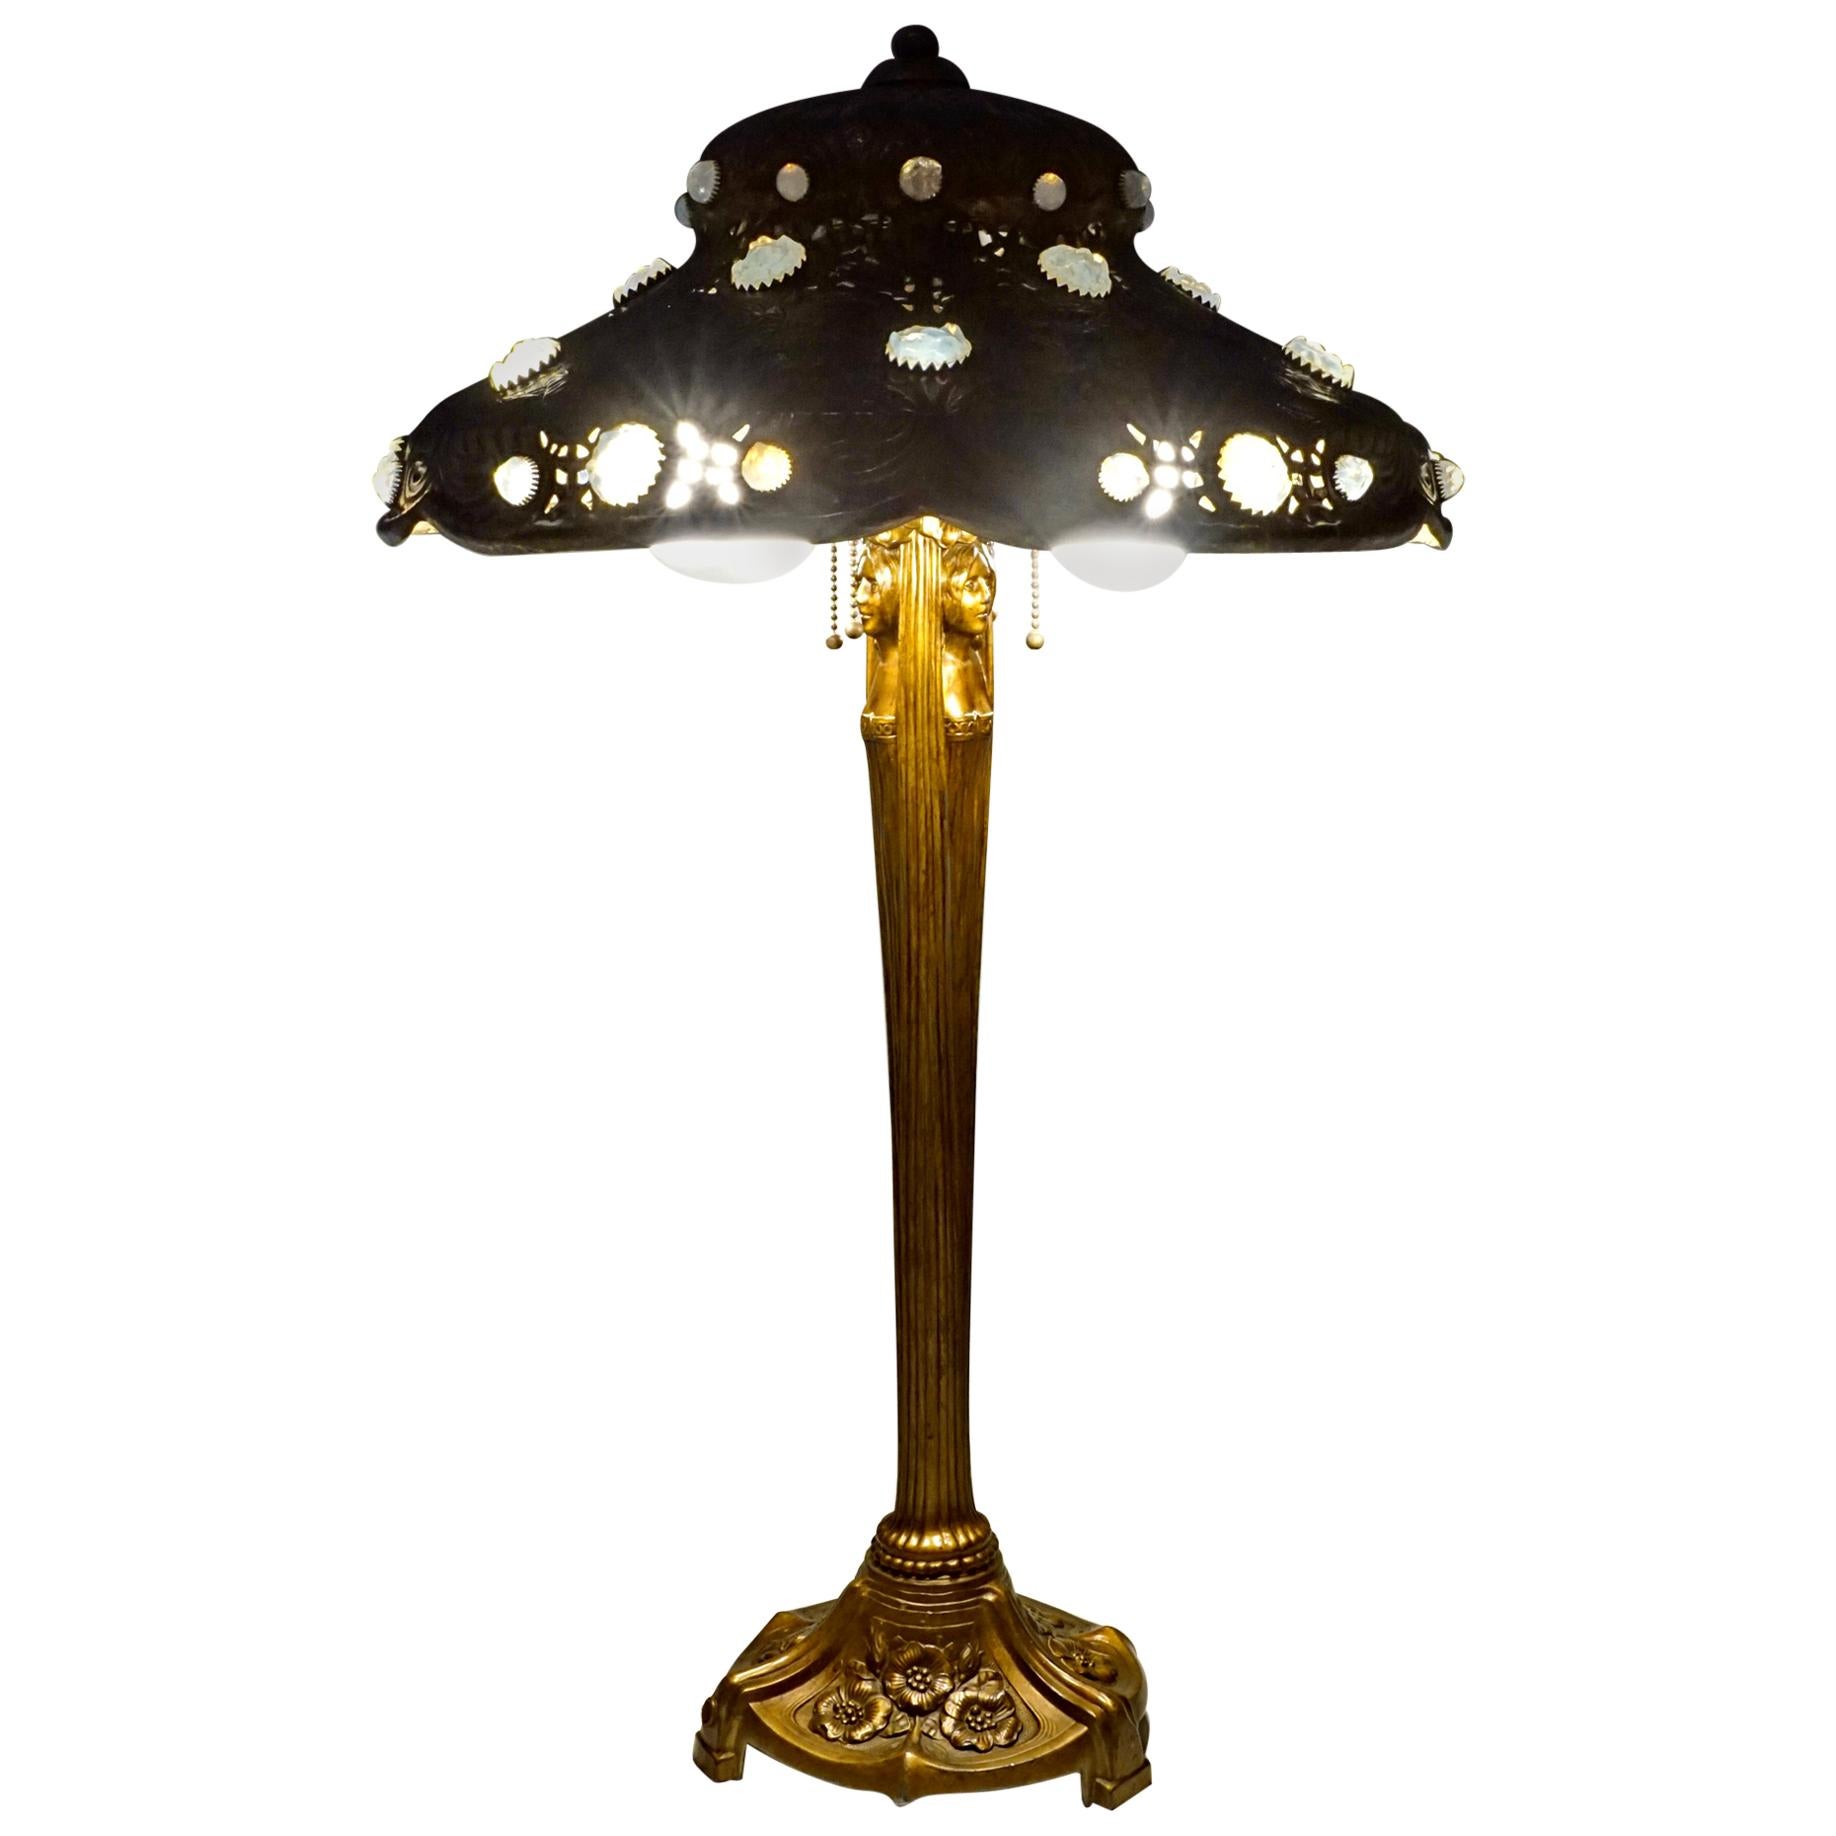 High Art Nouveau Table Lamp with Caryatides, circa 1900